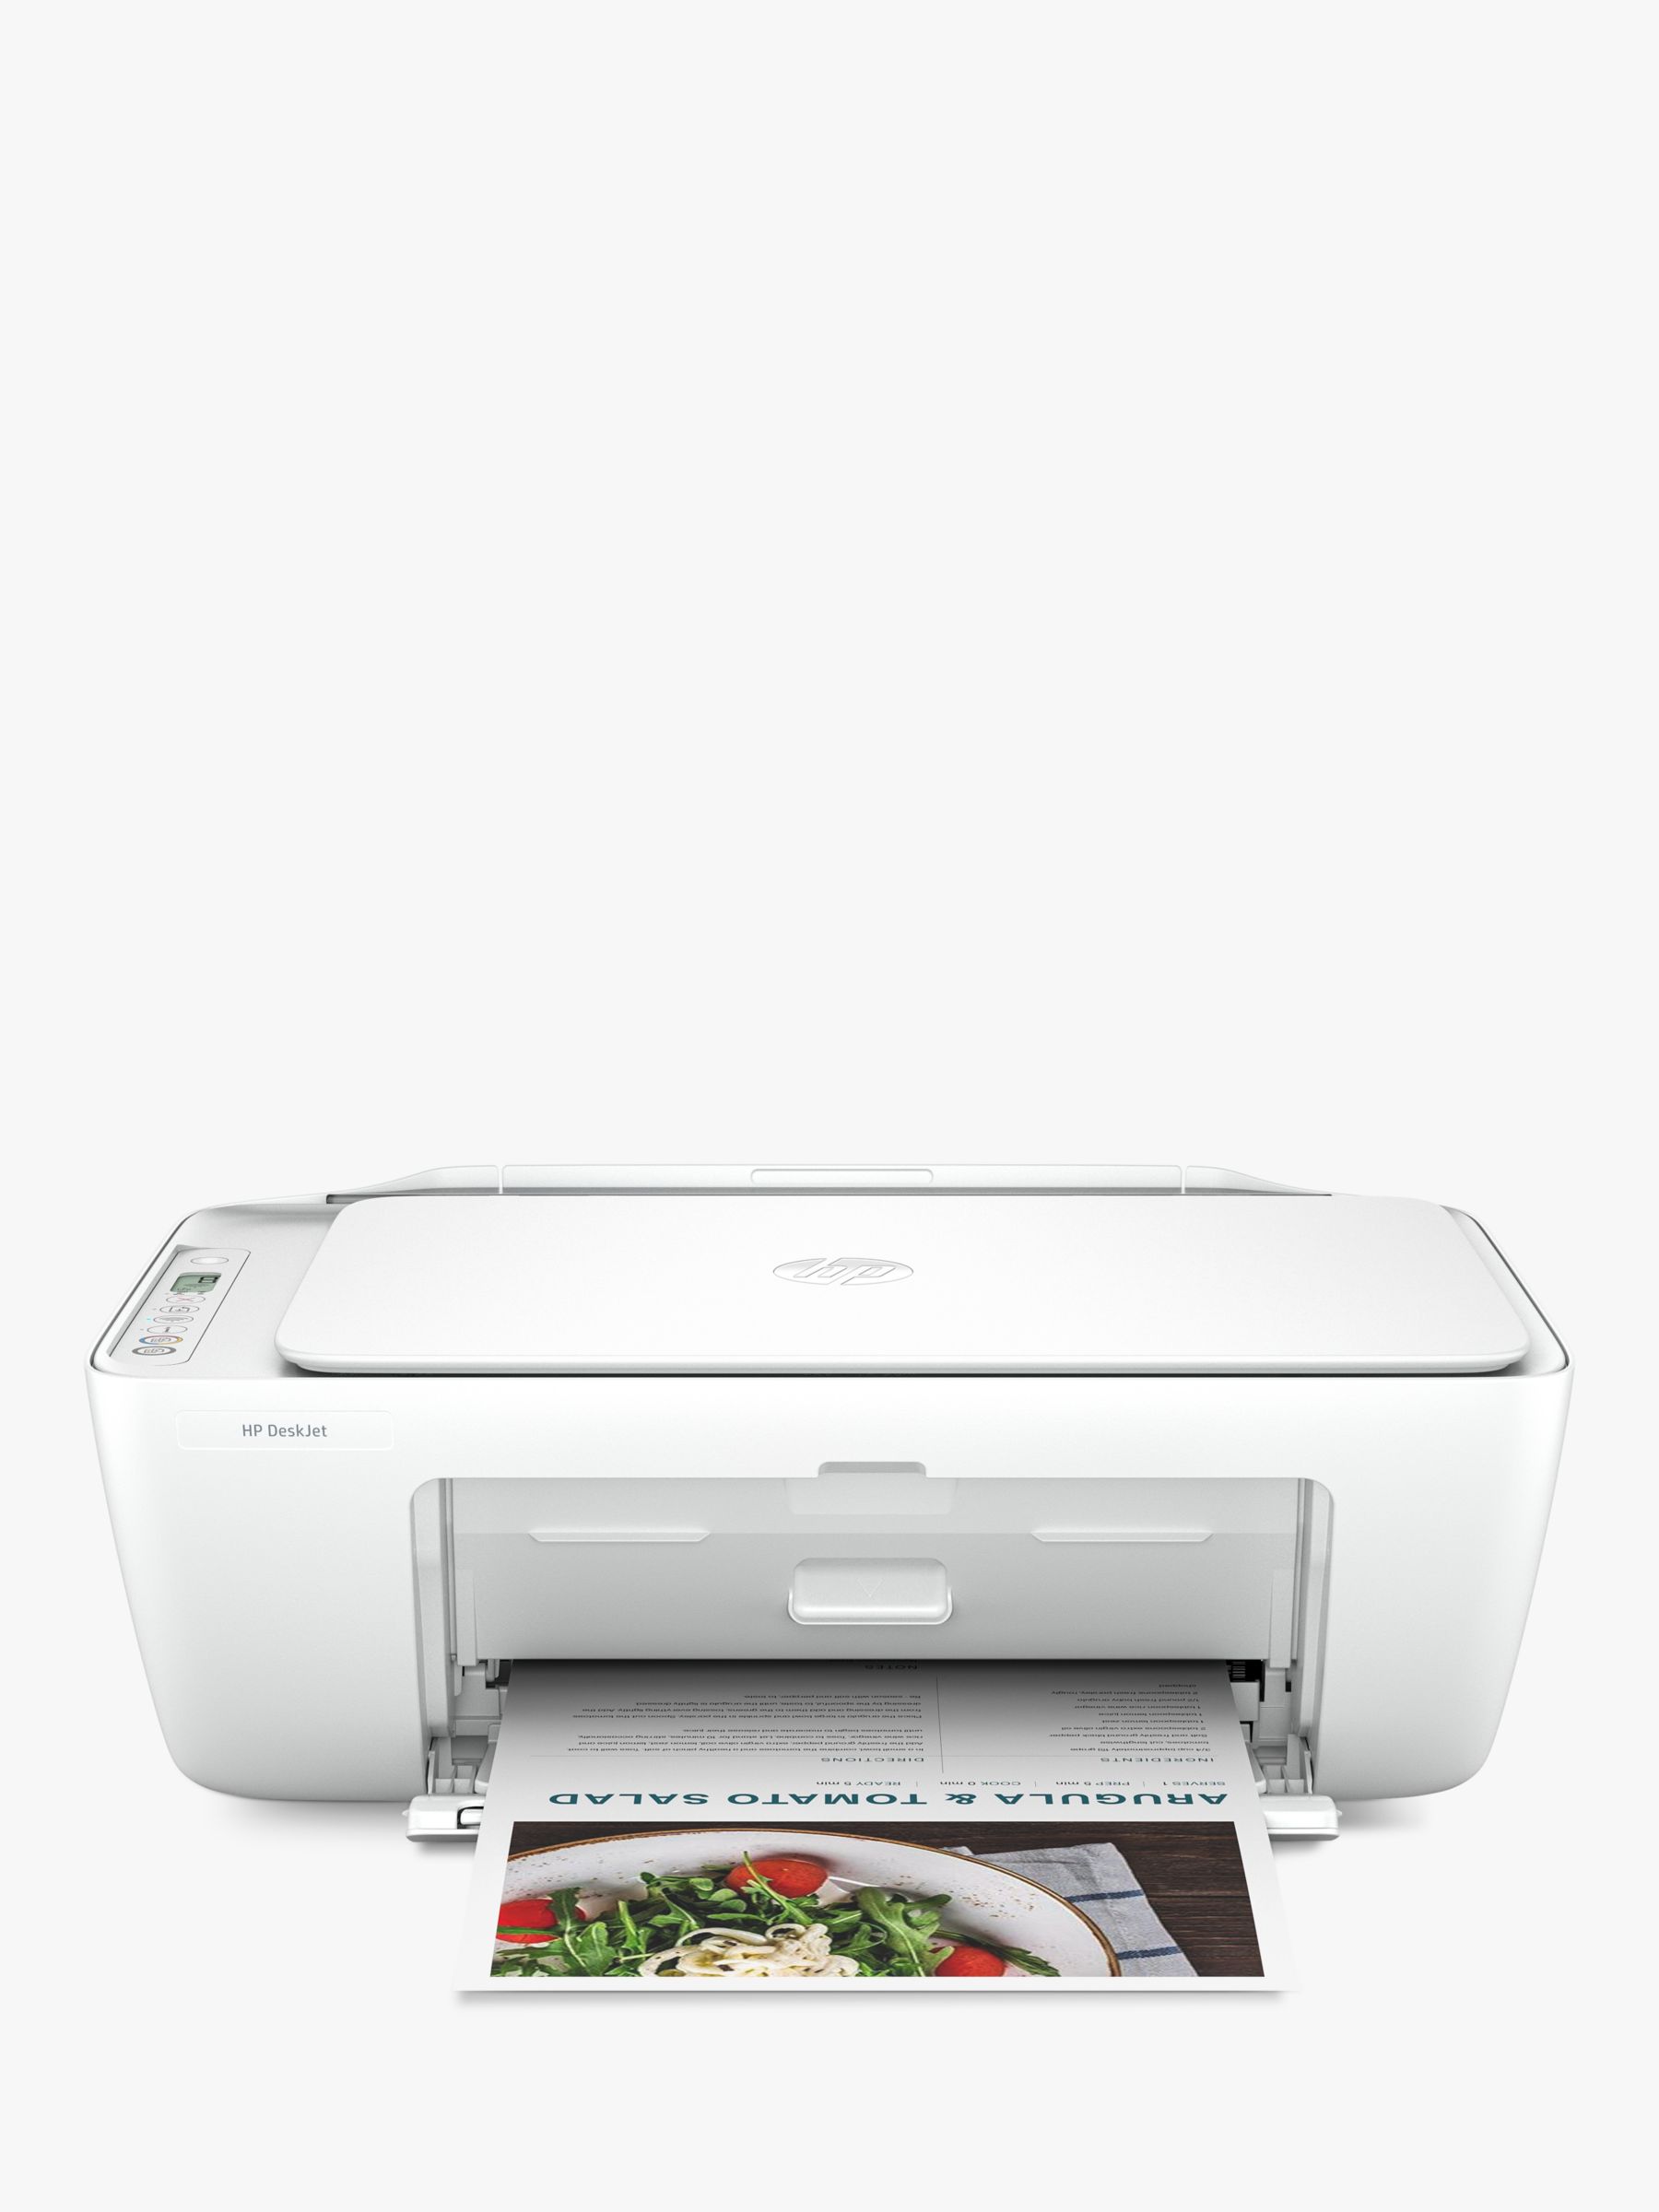 HP DeskJet plus 4155 Printer for Sale in Rockford, IL - OfferUp